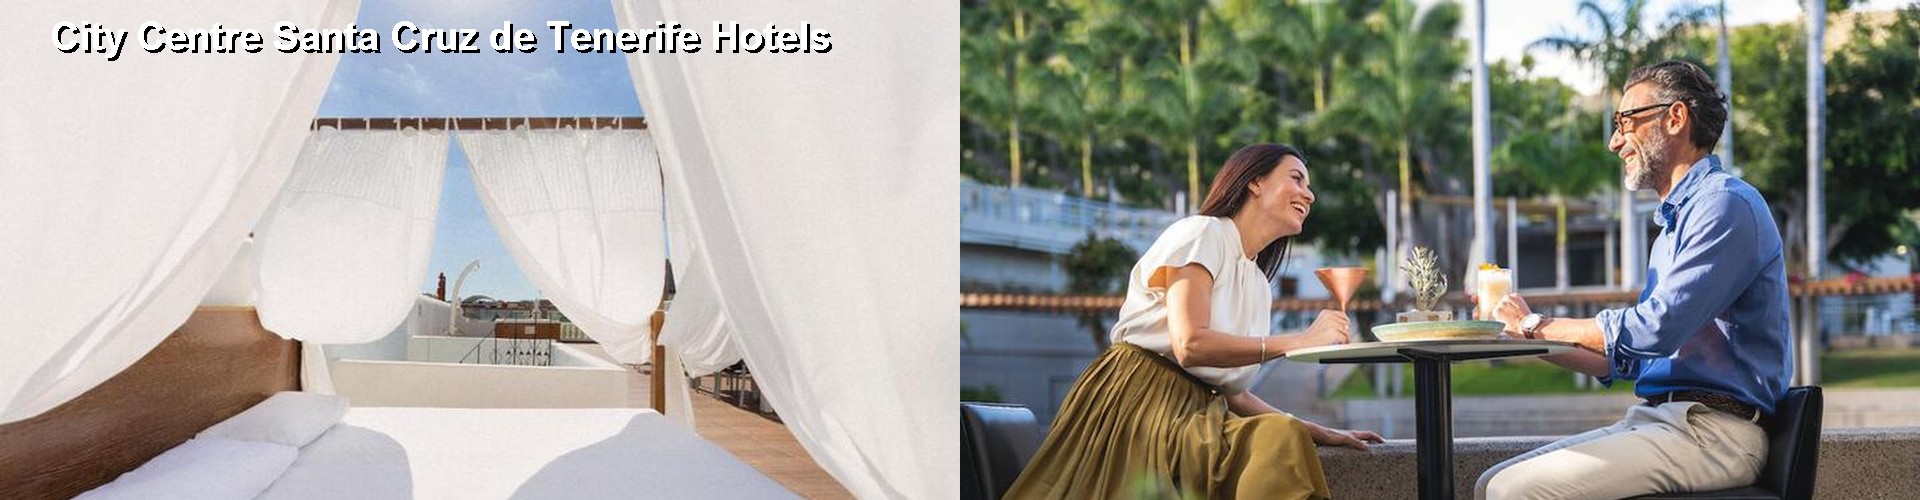 5 Best Hotels near City Centre Santa Cruz de Tenerife